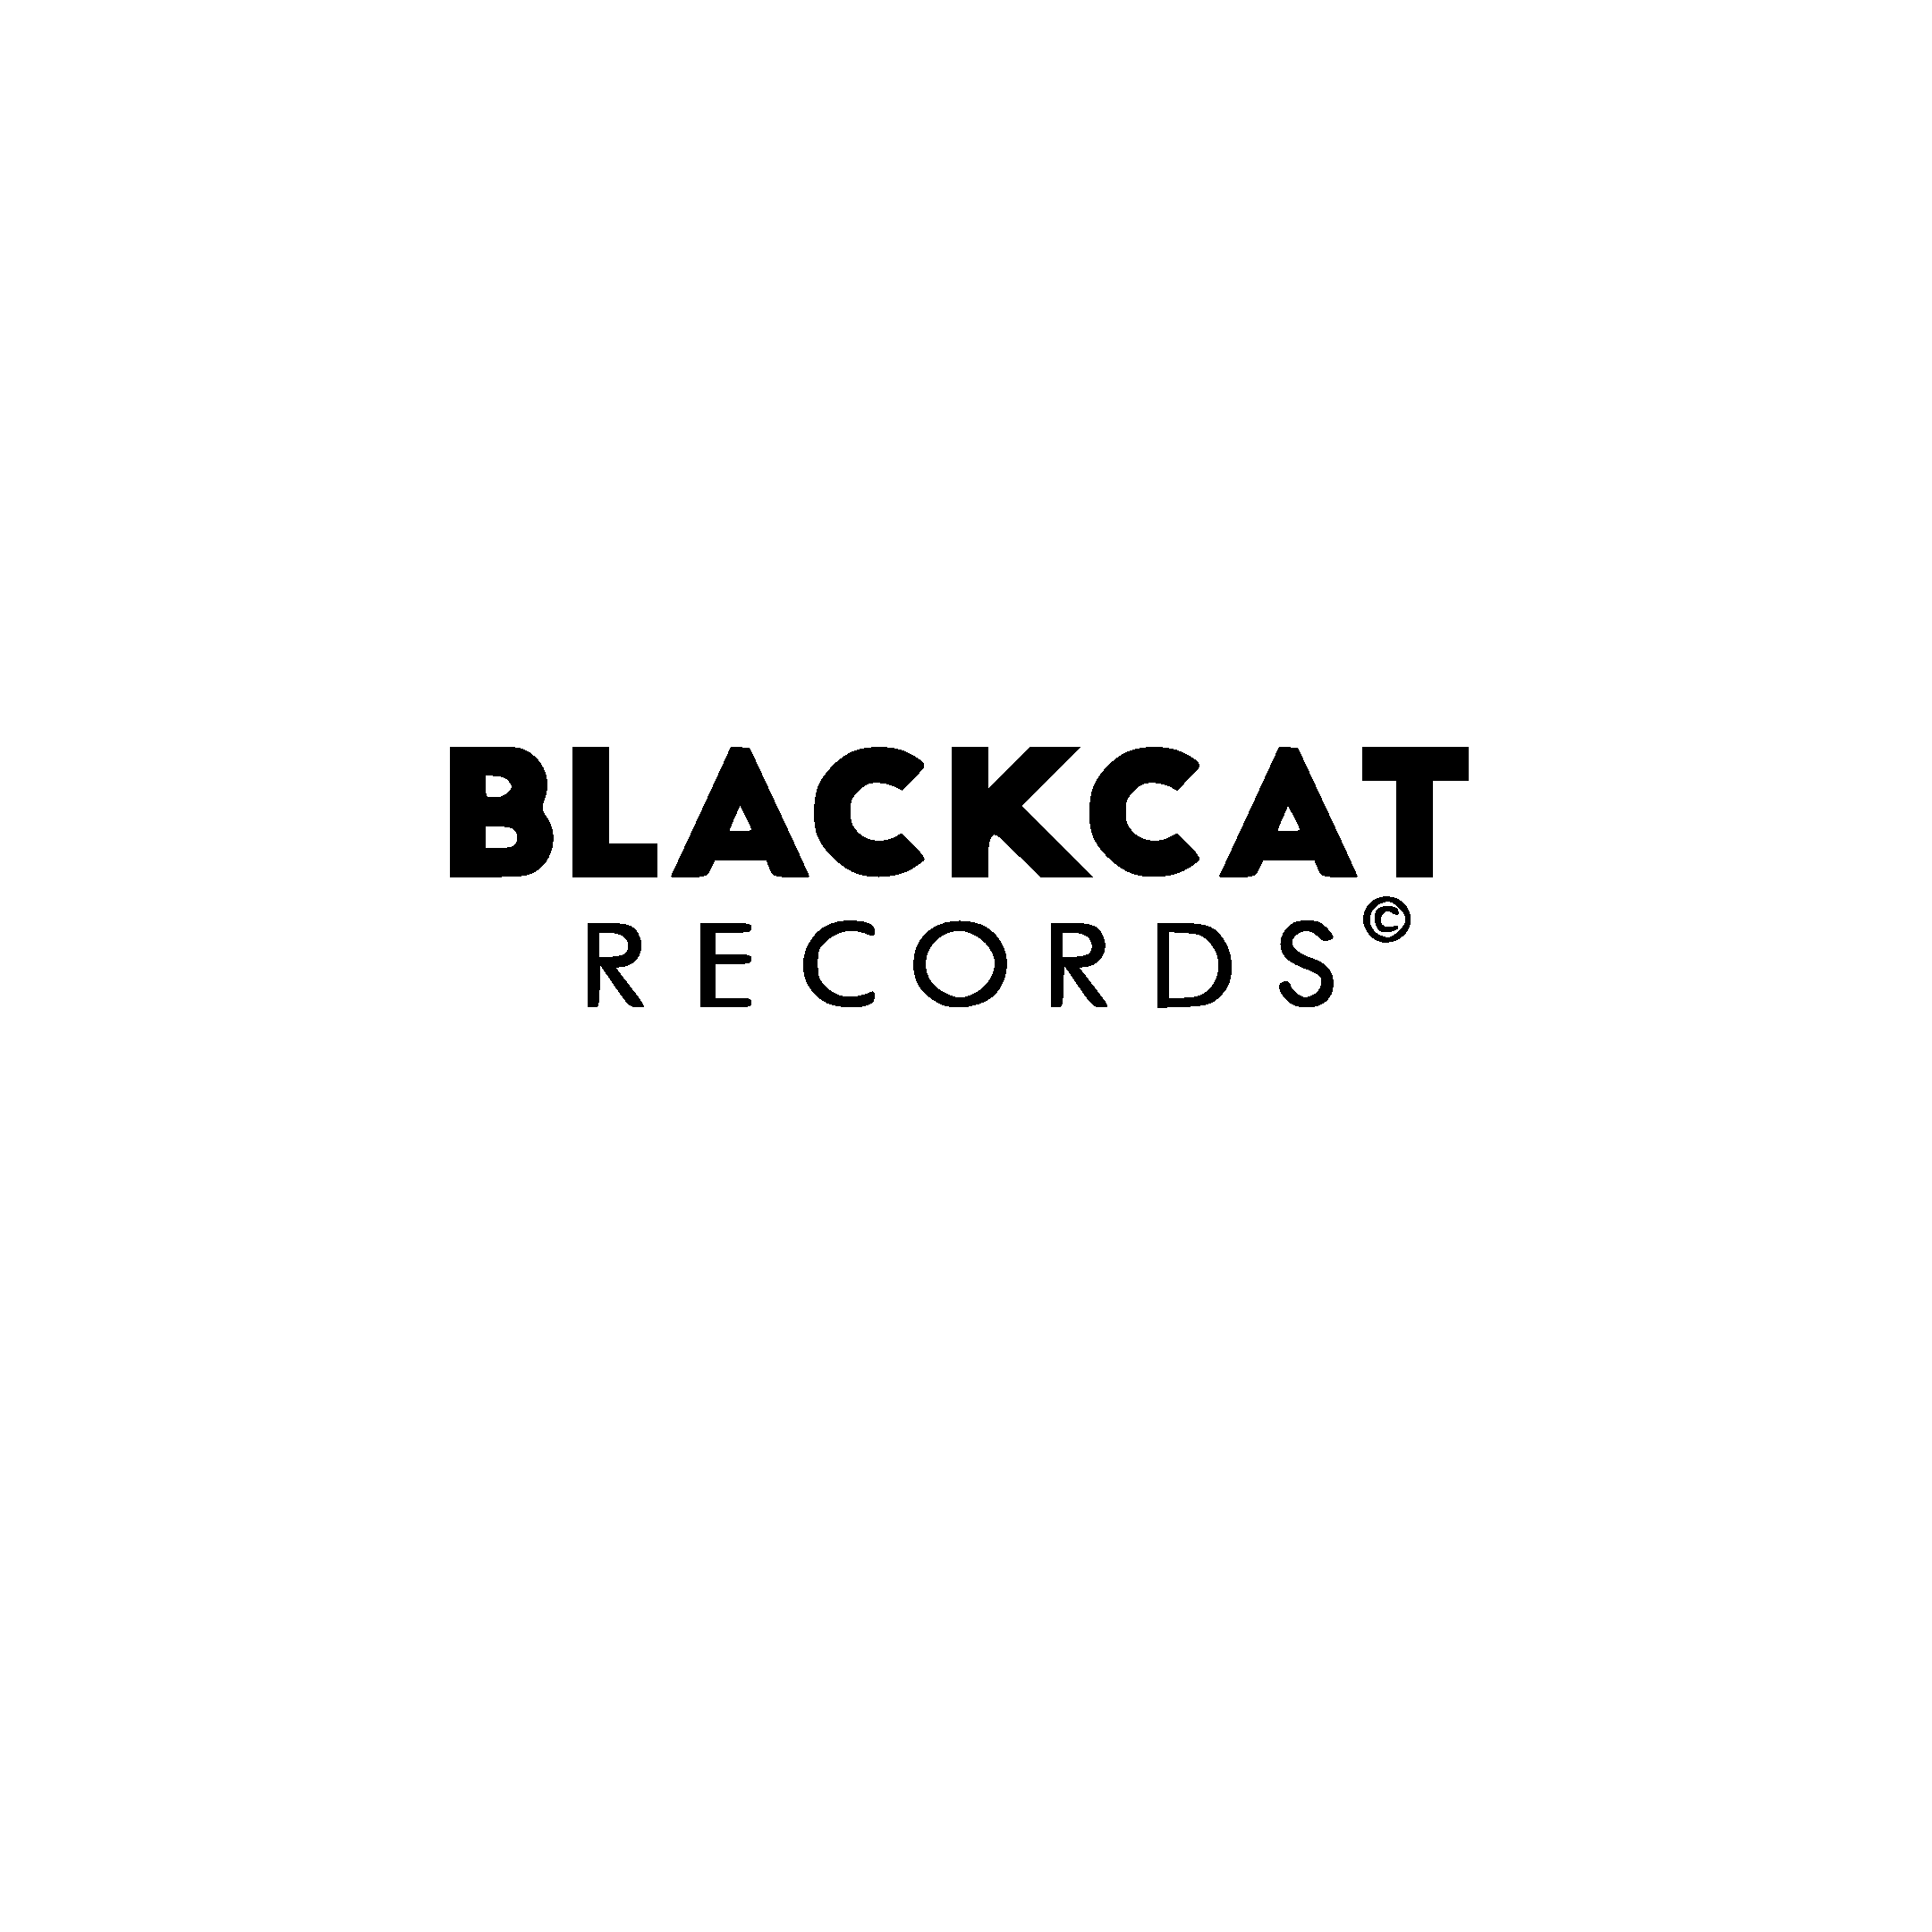 Blackcat Records